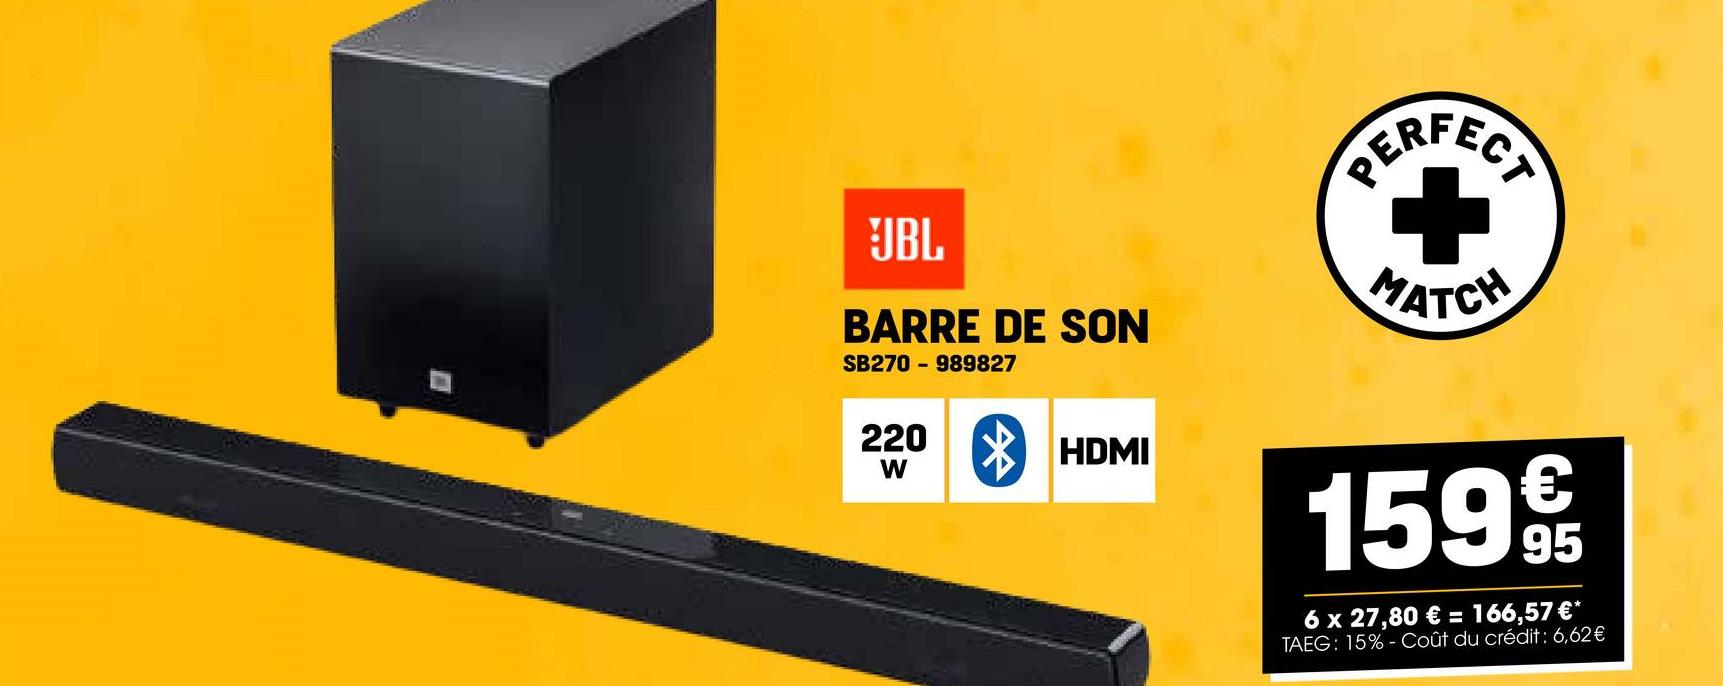 JBL
BARRE DE SON
SB270-989827
220
W
HDMI
PERFECT
MATCH
15995
6 x 27,80 € = 166,57 €*
TAEG: 15%- Coût du crédit: 6,62€